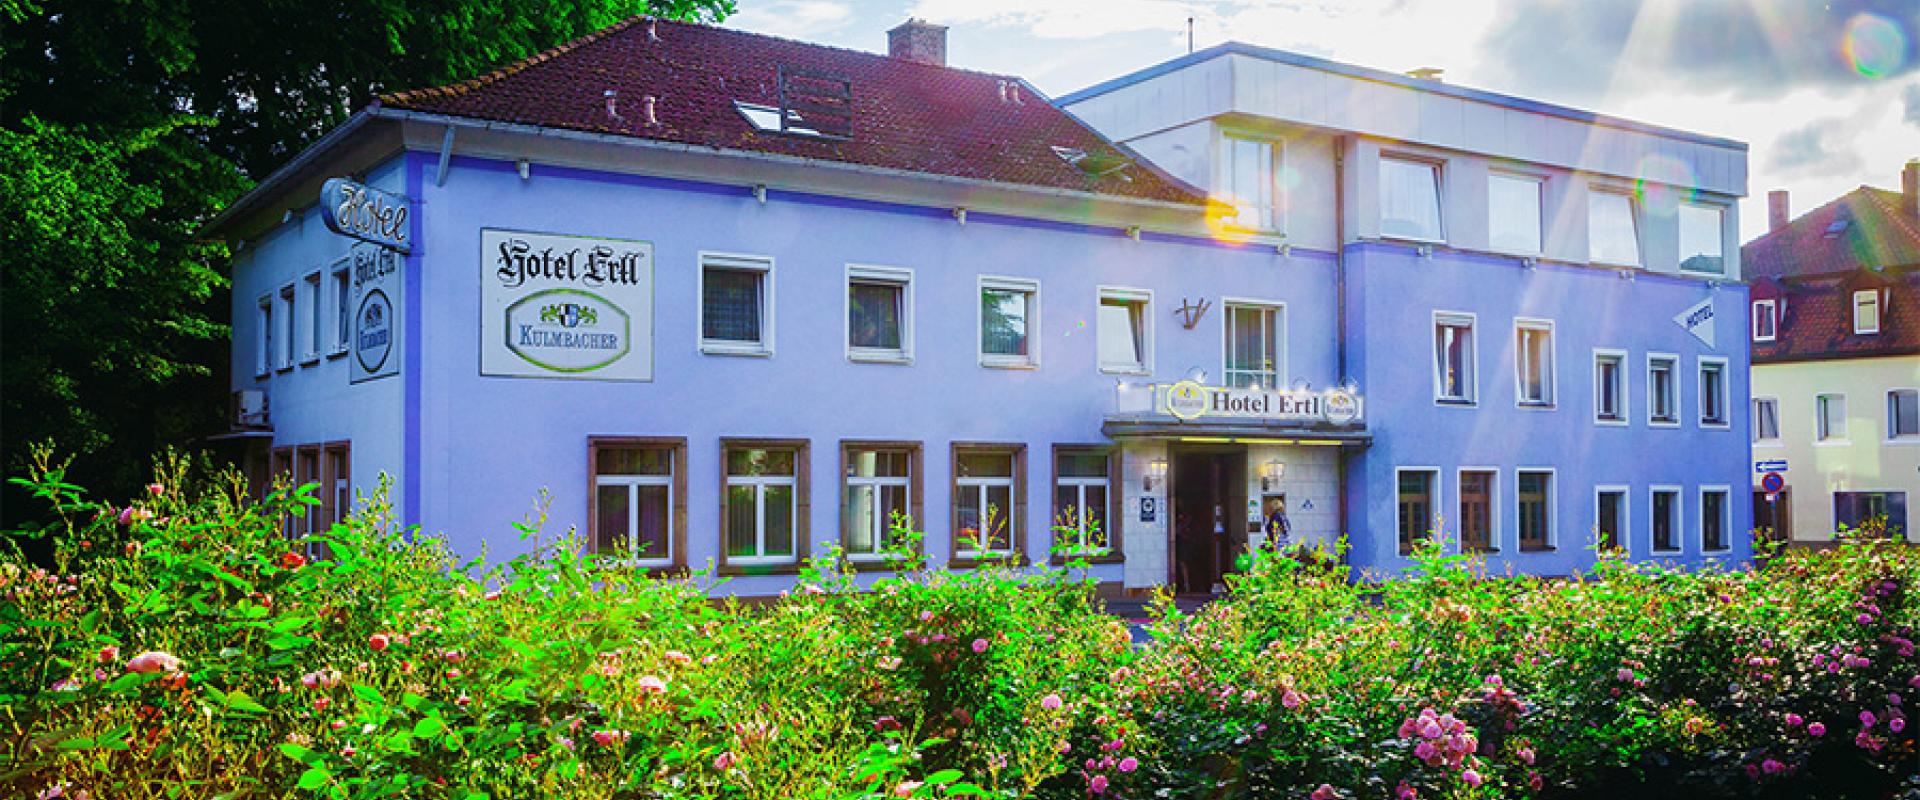 15886 Bikert Hotel Ertl Franken Ansicht.jpeg